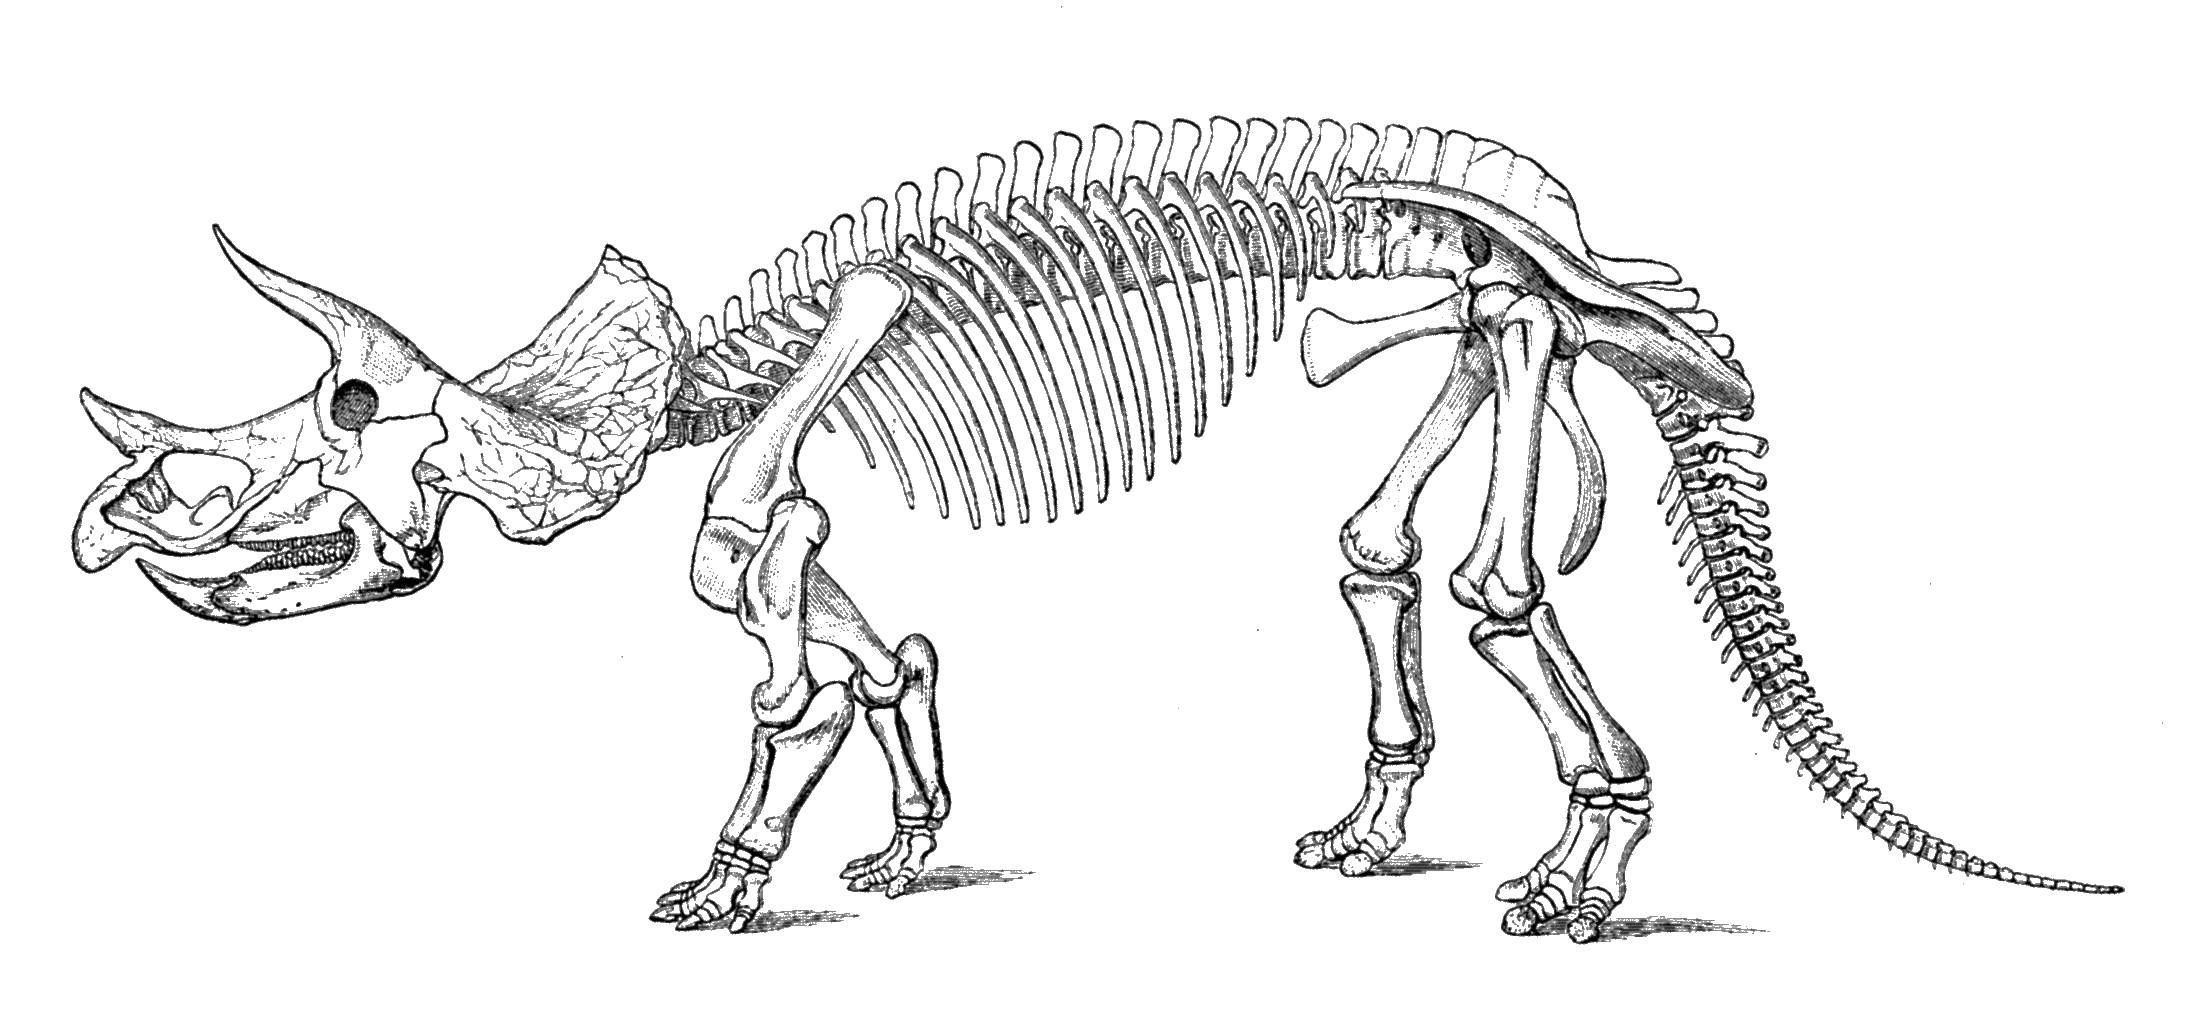   Скелет трицератопса